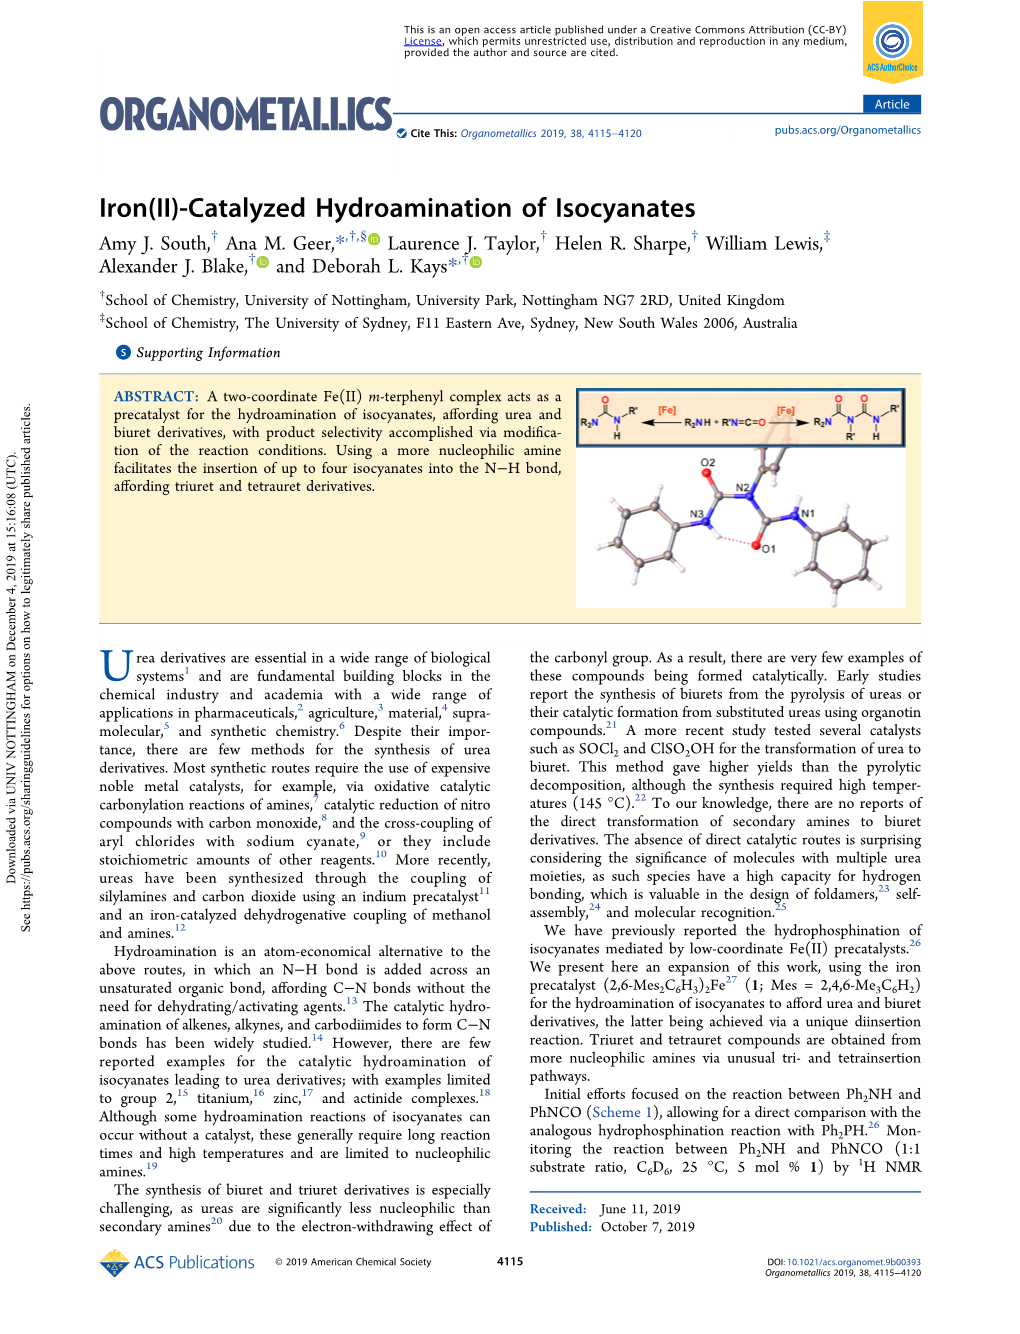 Iron(II)-Catalyzed Hydroamination of Isocyanates Amy J